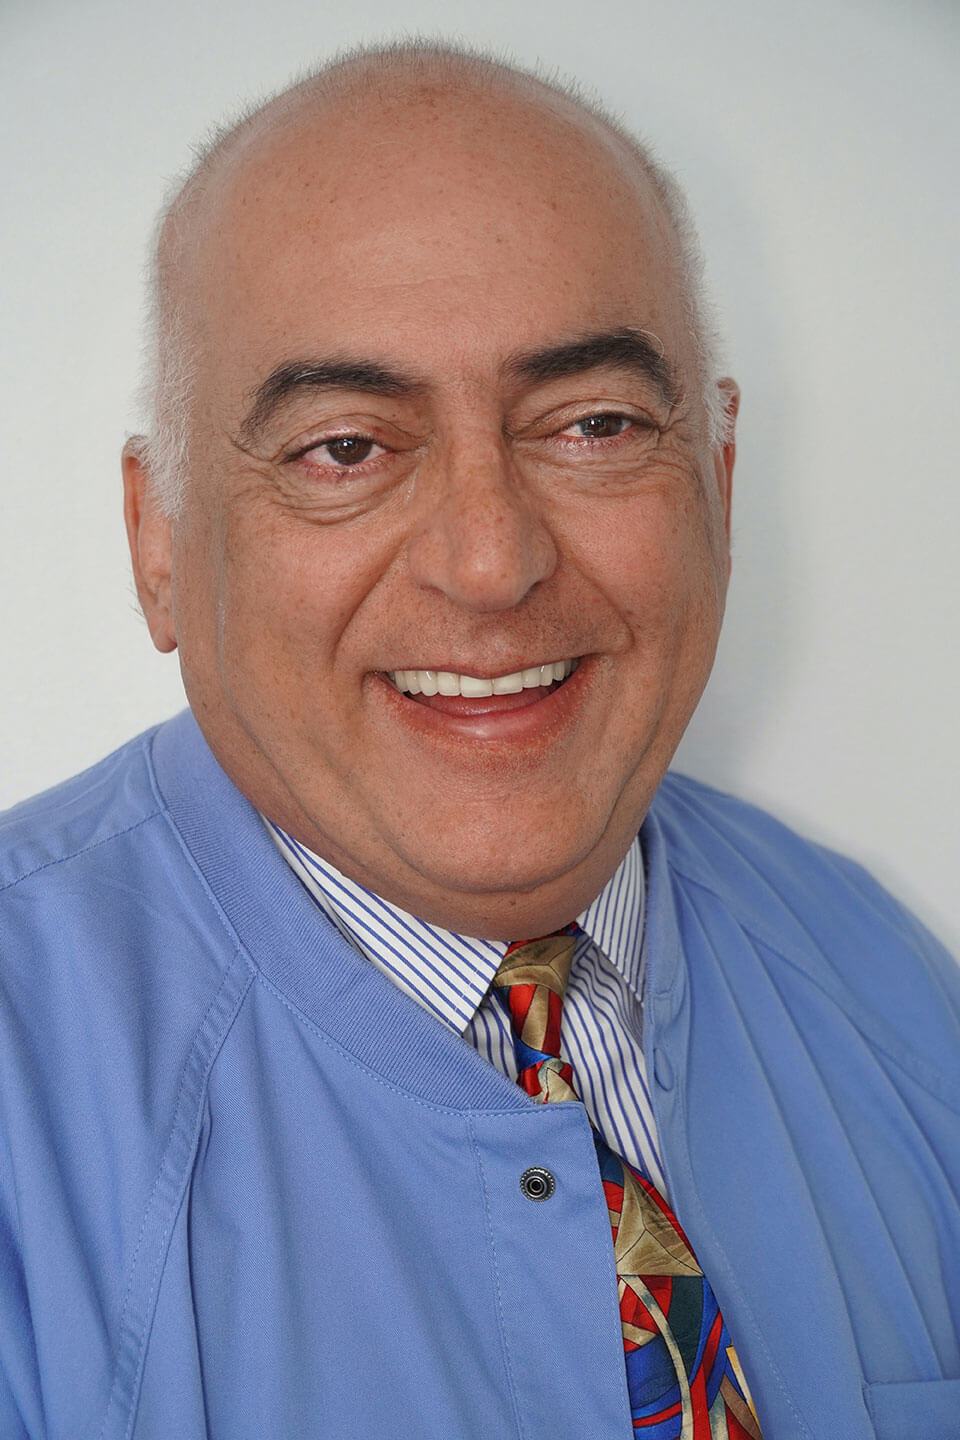 A smiling photo of Dr. Khattab